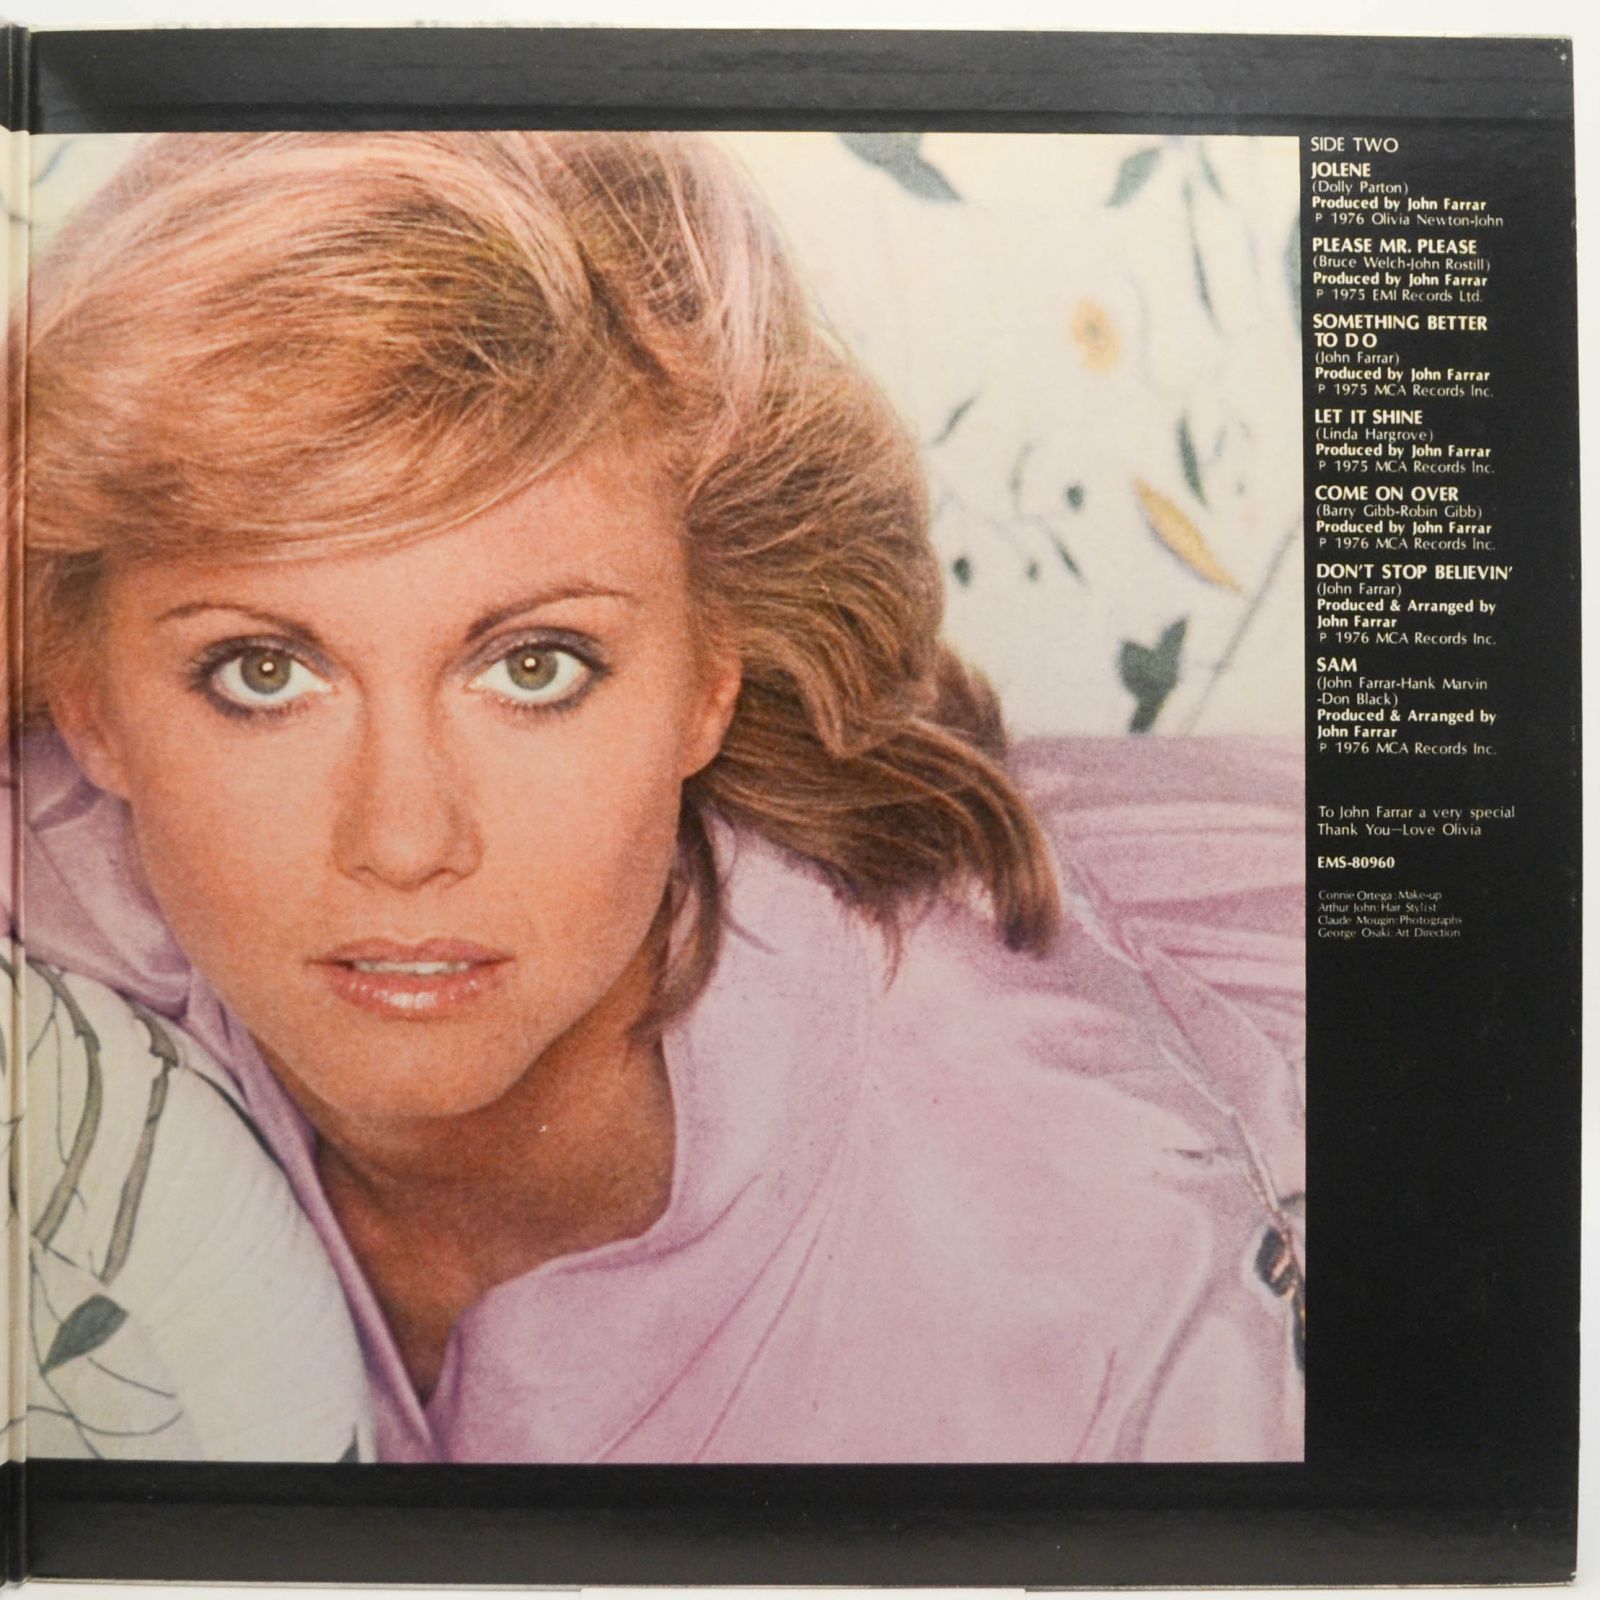 Olivia Newton-John — Olivia Newton-John's Greatest Hits, 1977